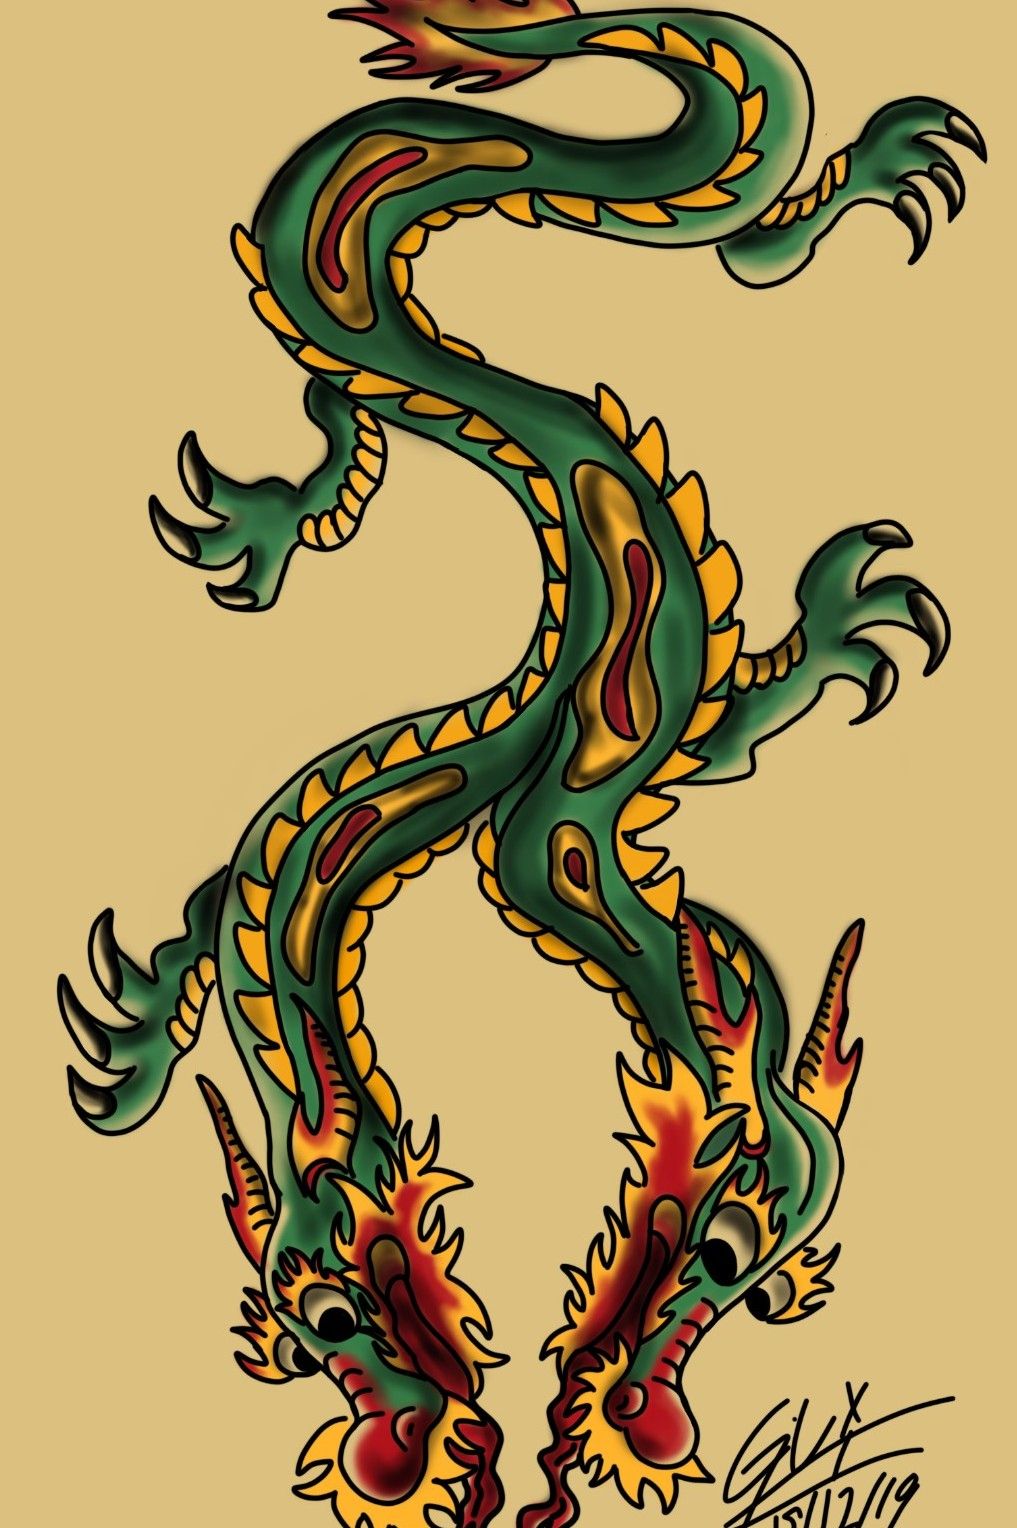 Twoheaded Dragon tattoos stock illustration Illustration of dragons   33421123